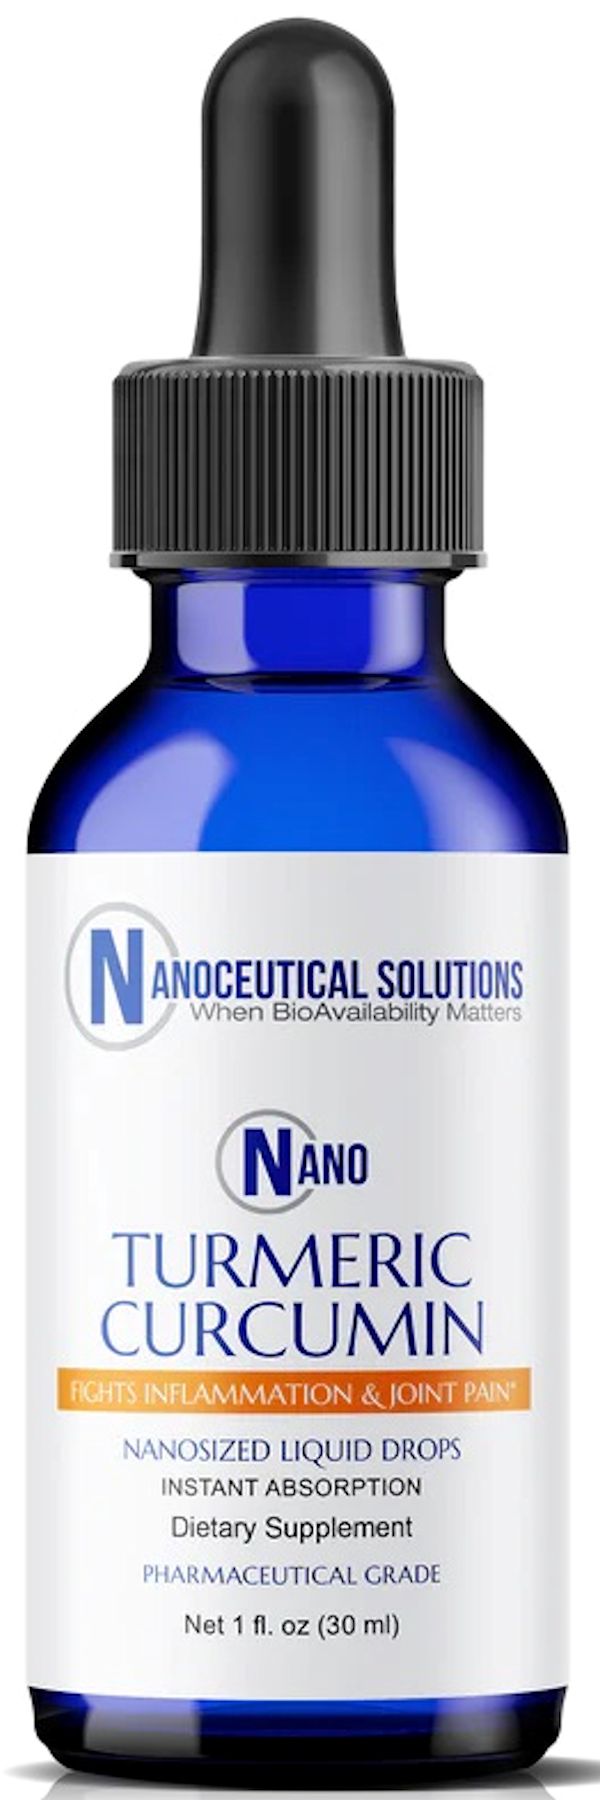 Nanoceutical Solutions Nano Turmeric Curcumin 1 month supply|Lowcostvitamin.com